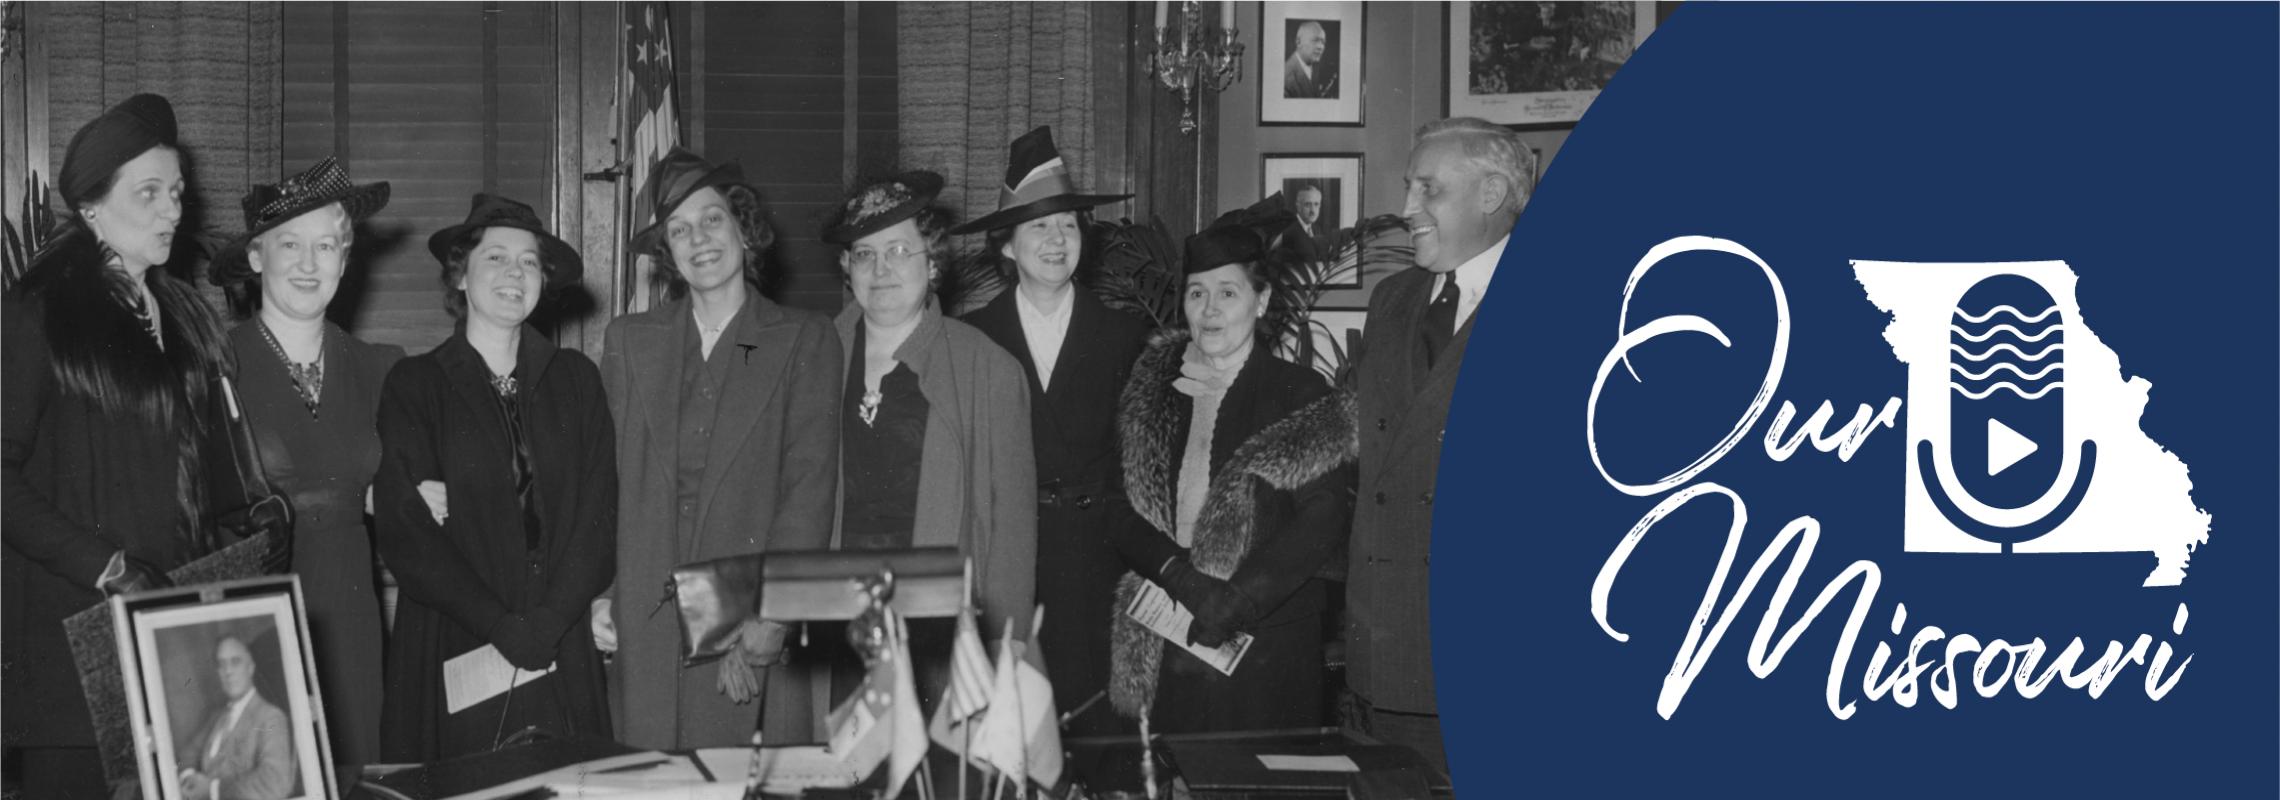 Democratic Women's Regional Conference, 1939, St. Louis. [Bernard Dickmann Photograph Collection (S0555)]